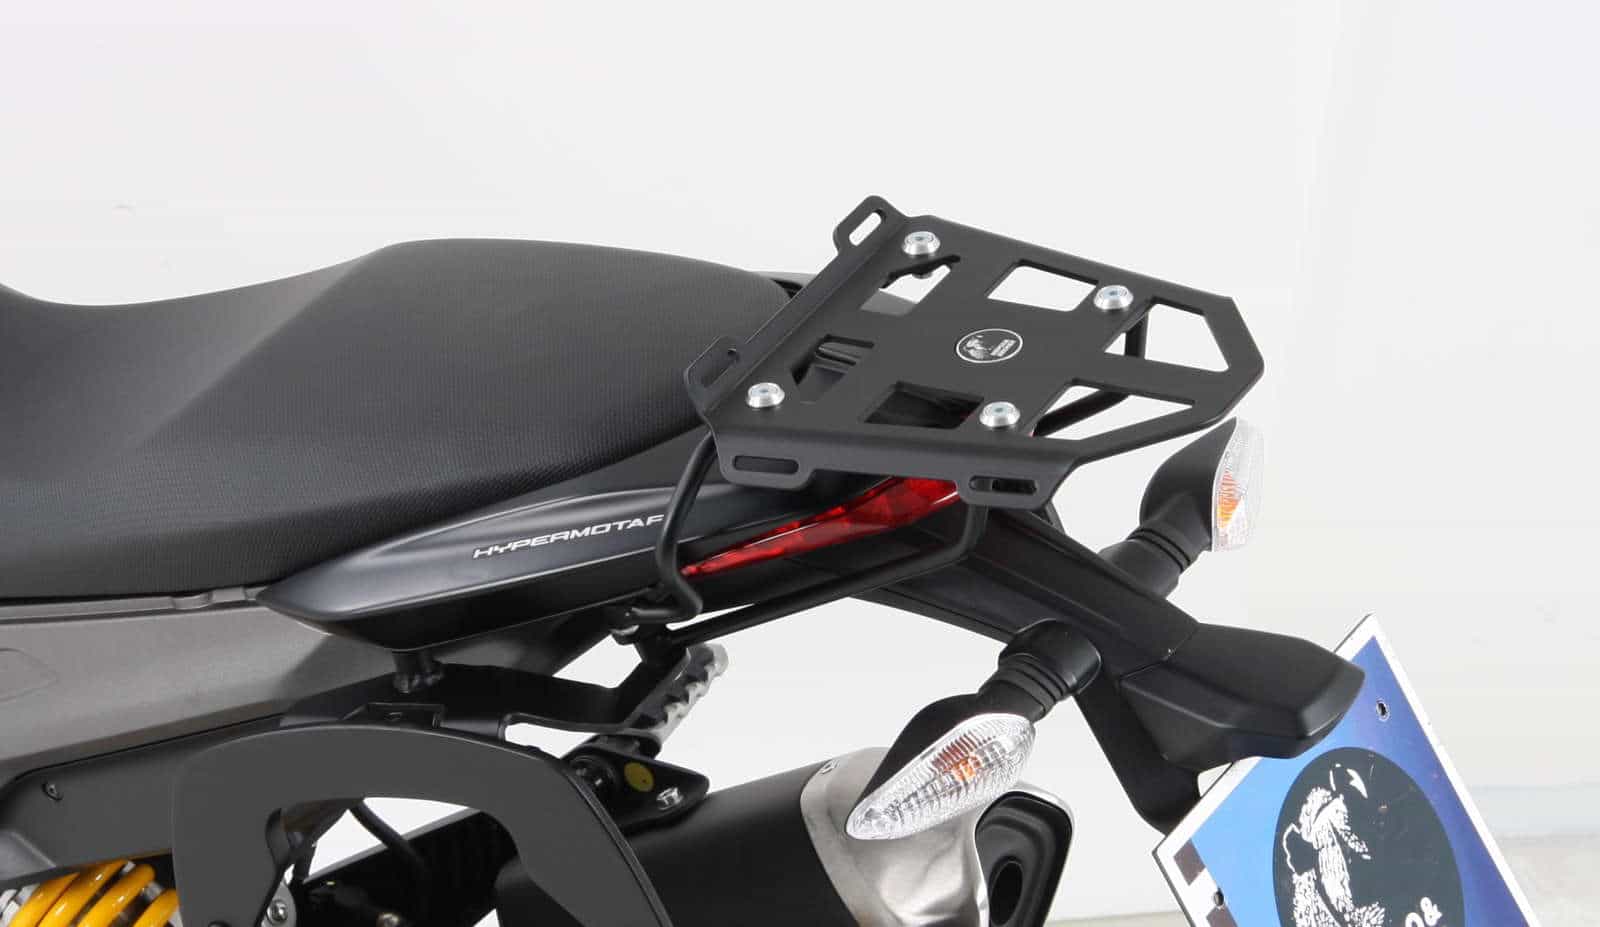 Minirack soft luggage rear rack for Ducati Hypermotard 821/SP (2013-2015)